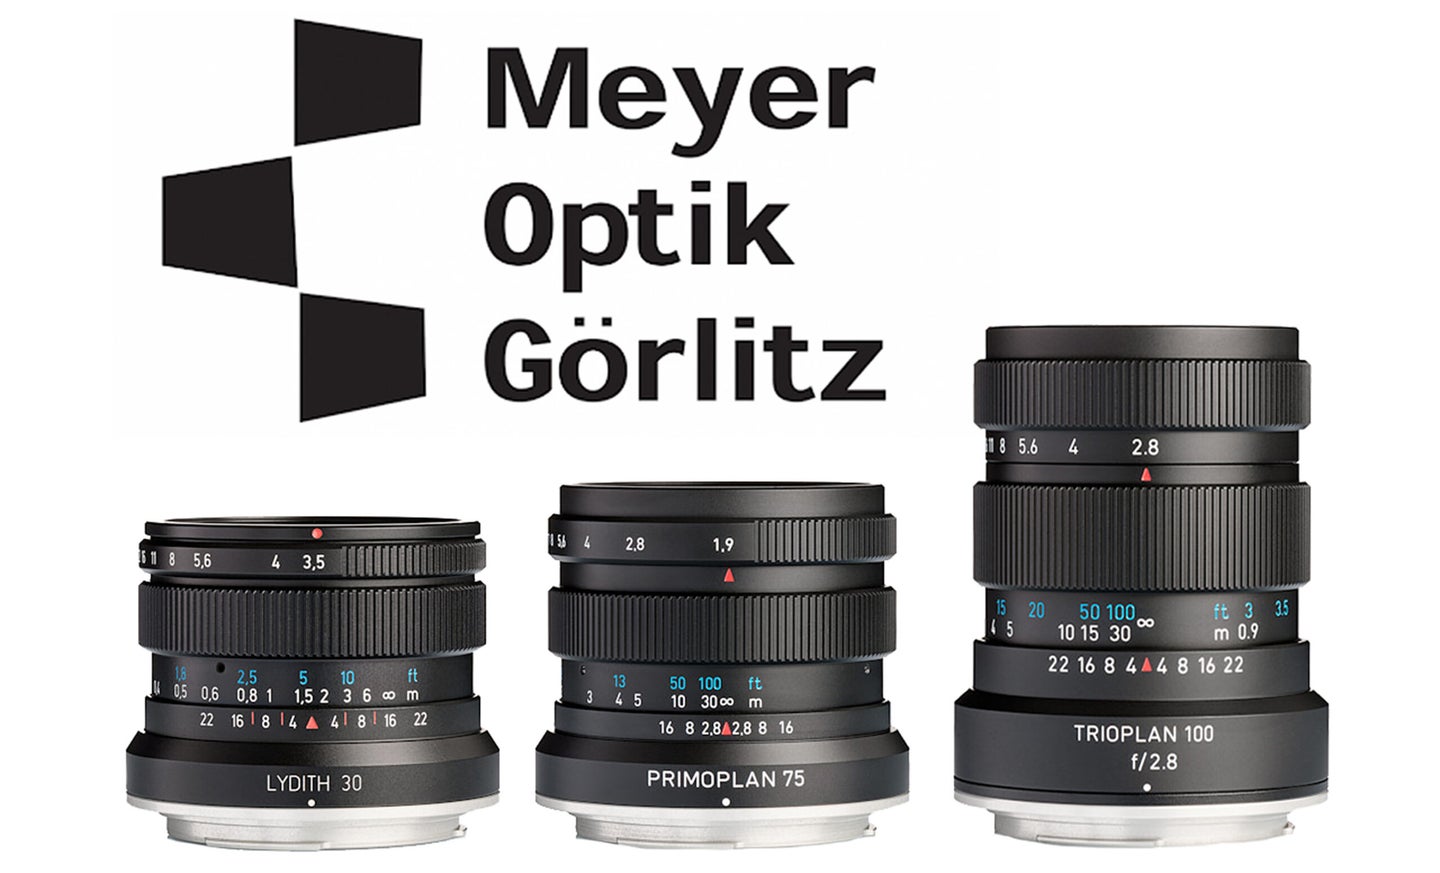 Meyer Optik Görlitz has 125 years of history manufacturing optics.